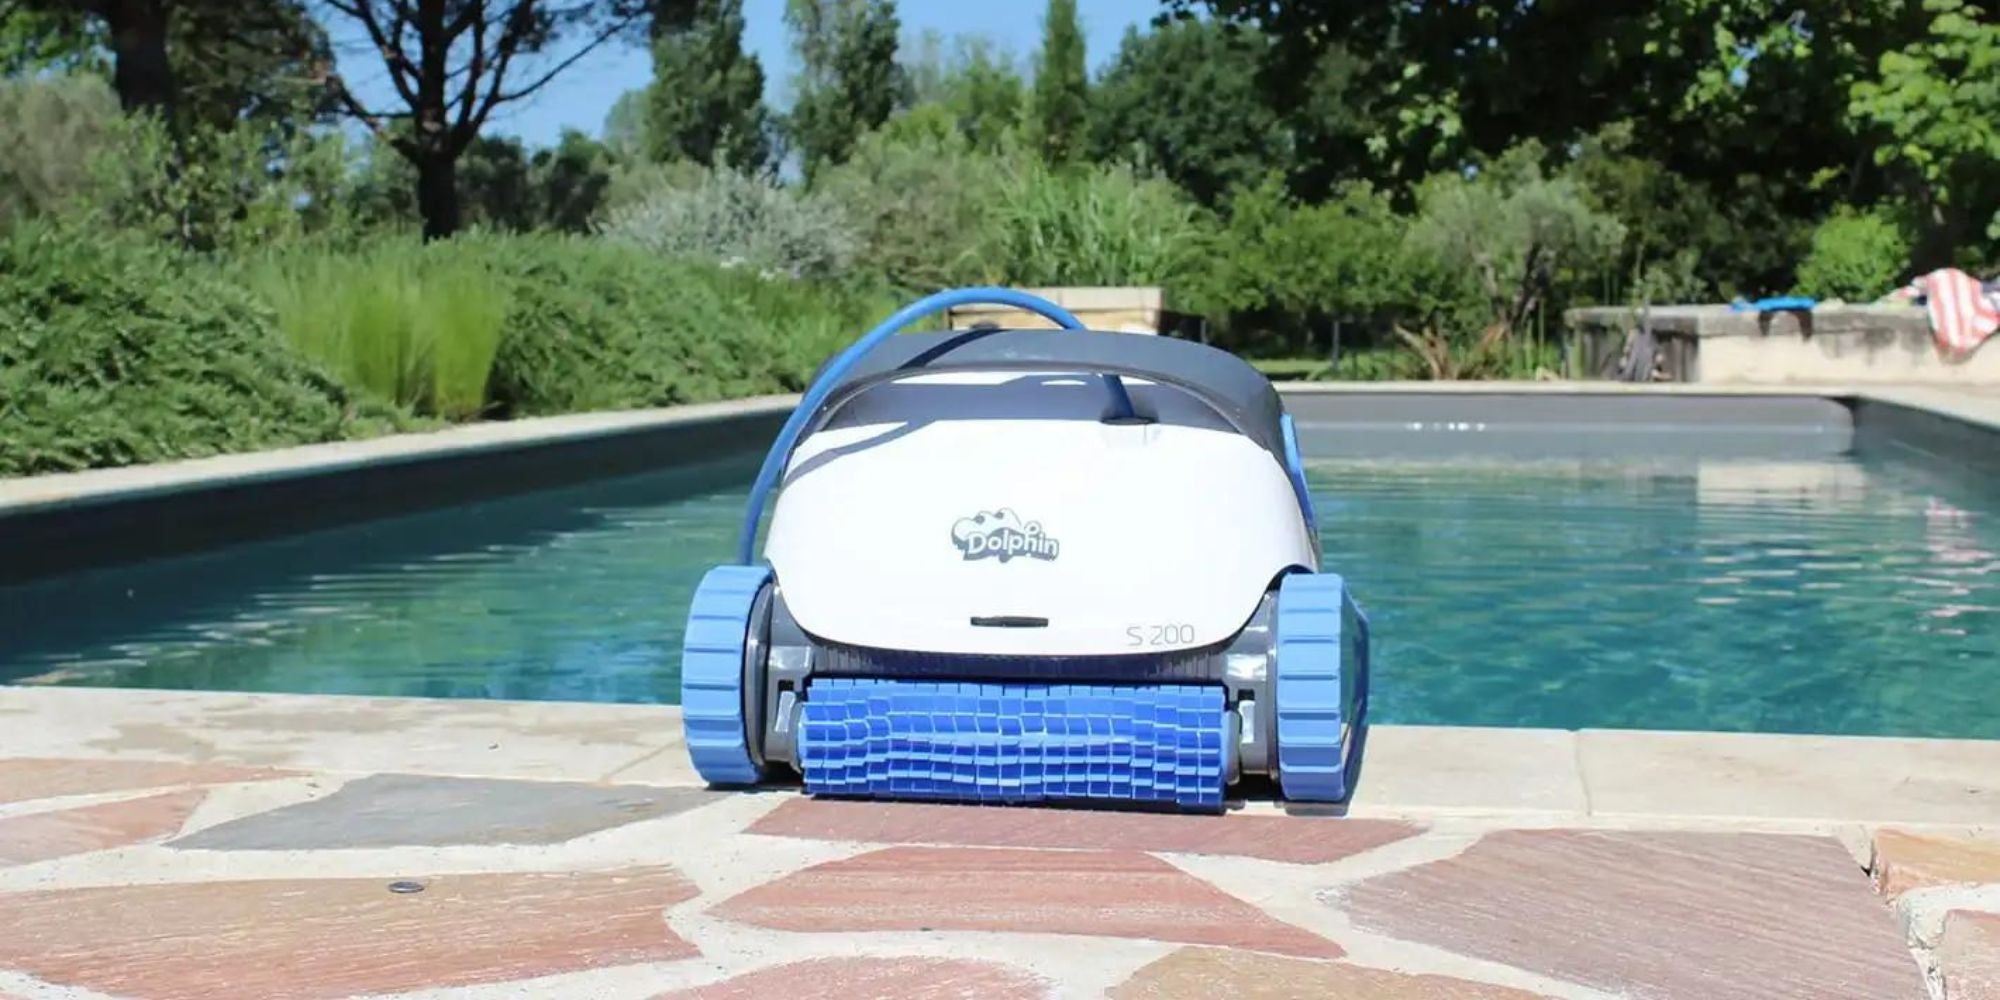 Combien de temps dure un robot piscine ?